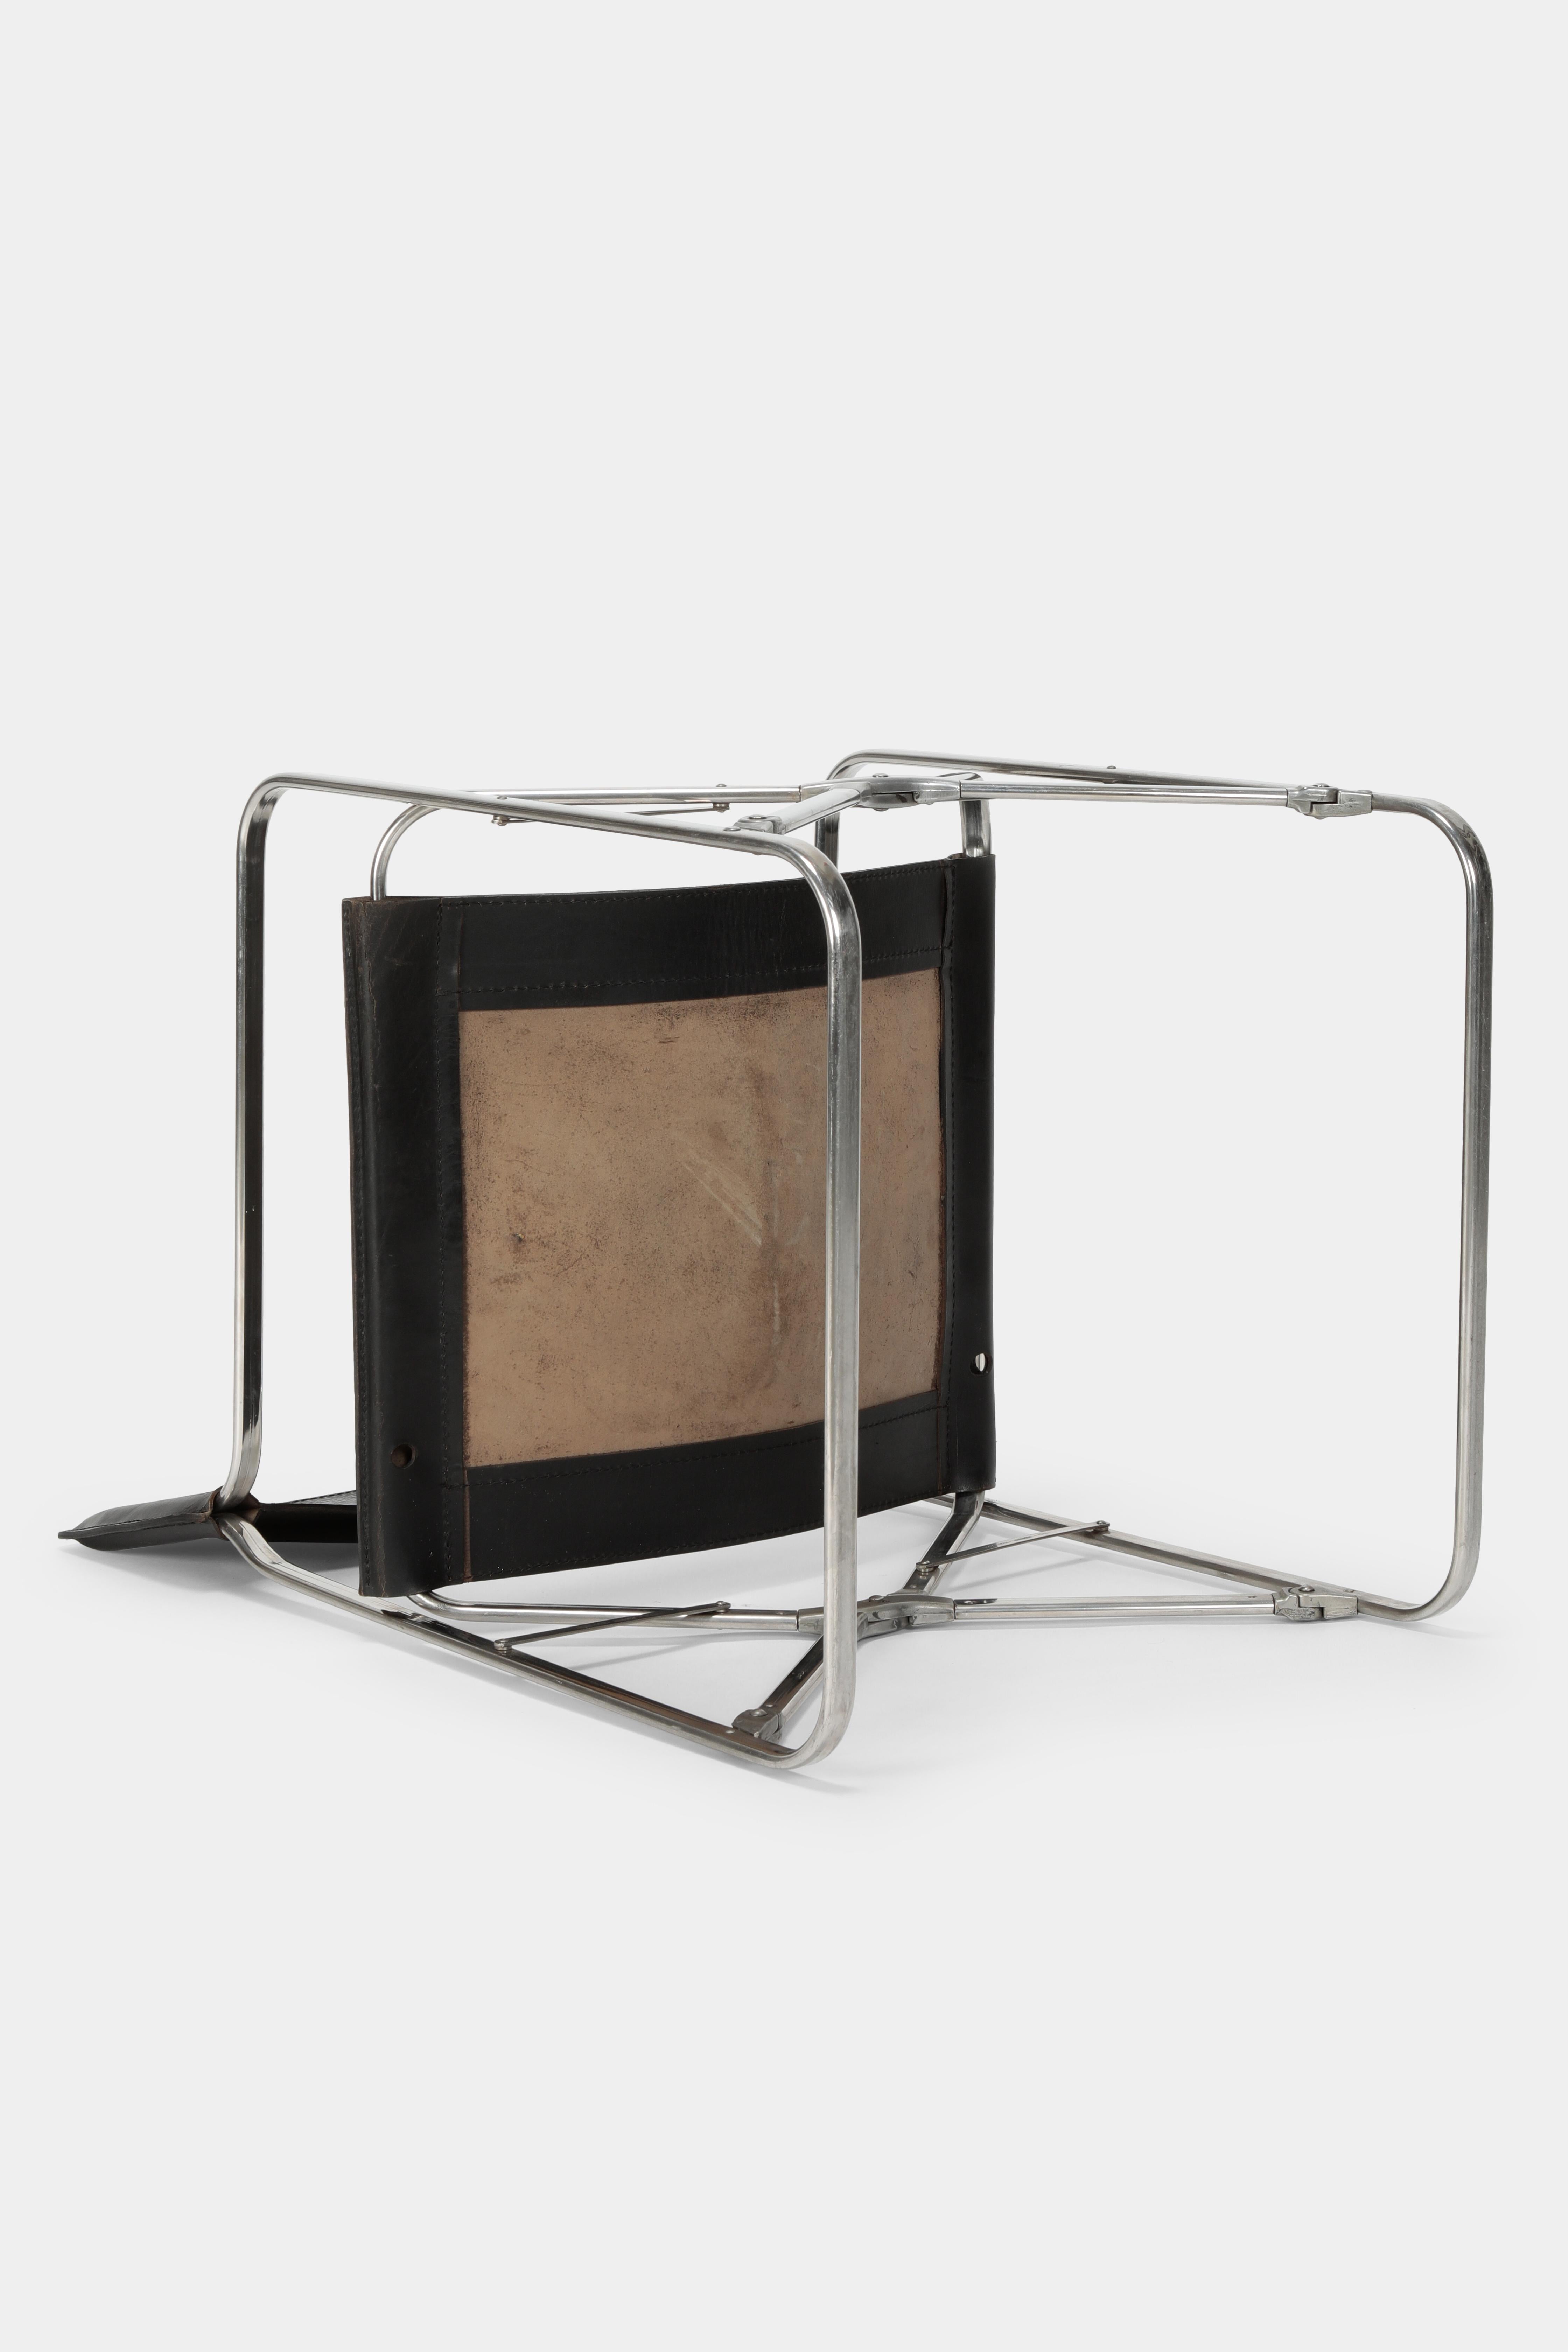 Italian Gae Aulenti Folding Chair April 2120 Zanotta, 1960s